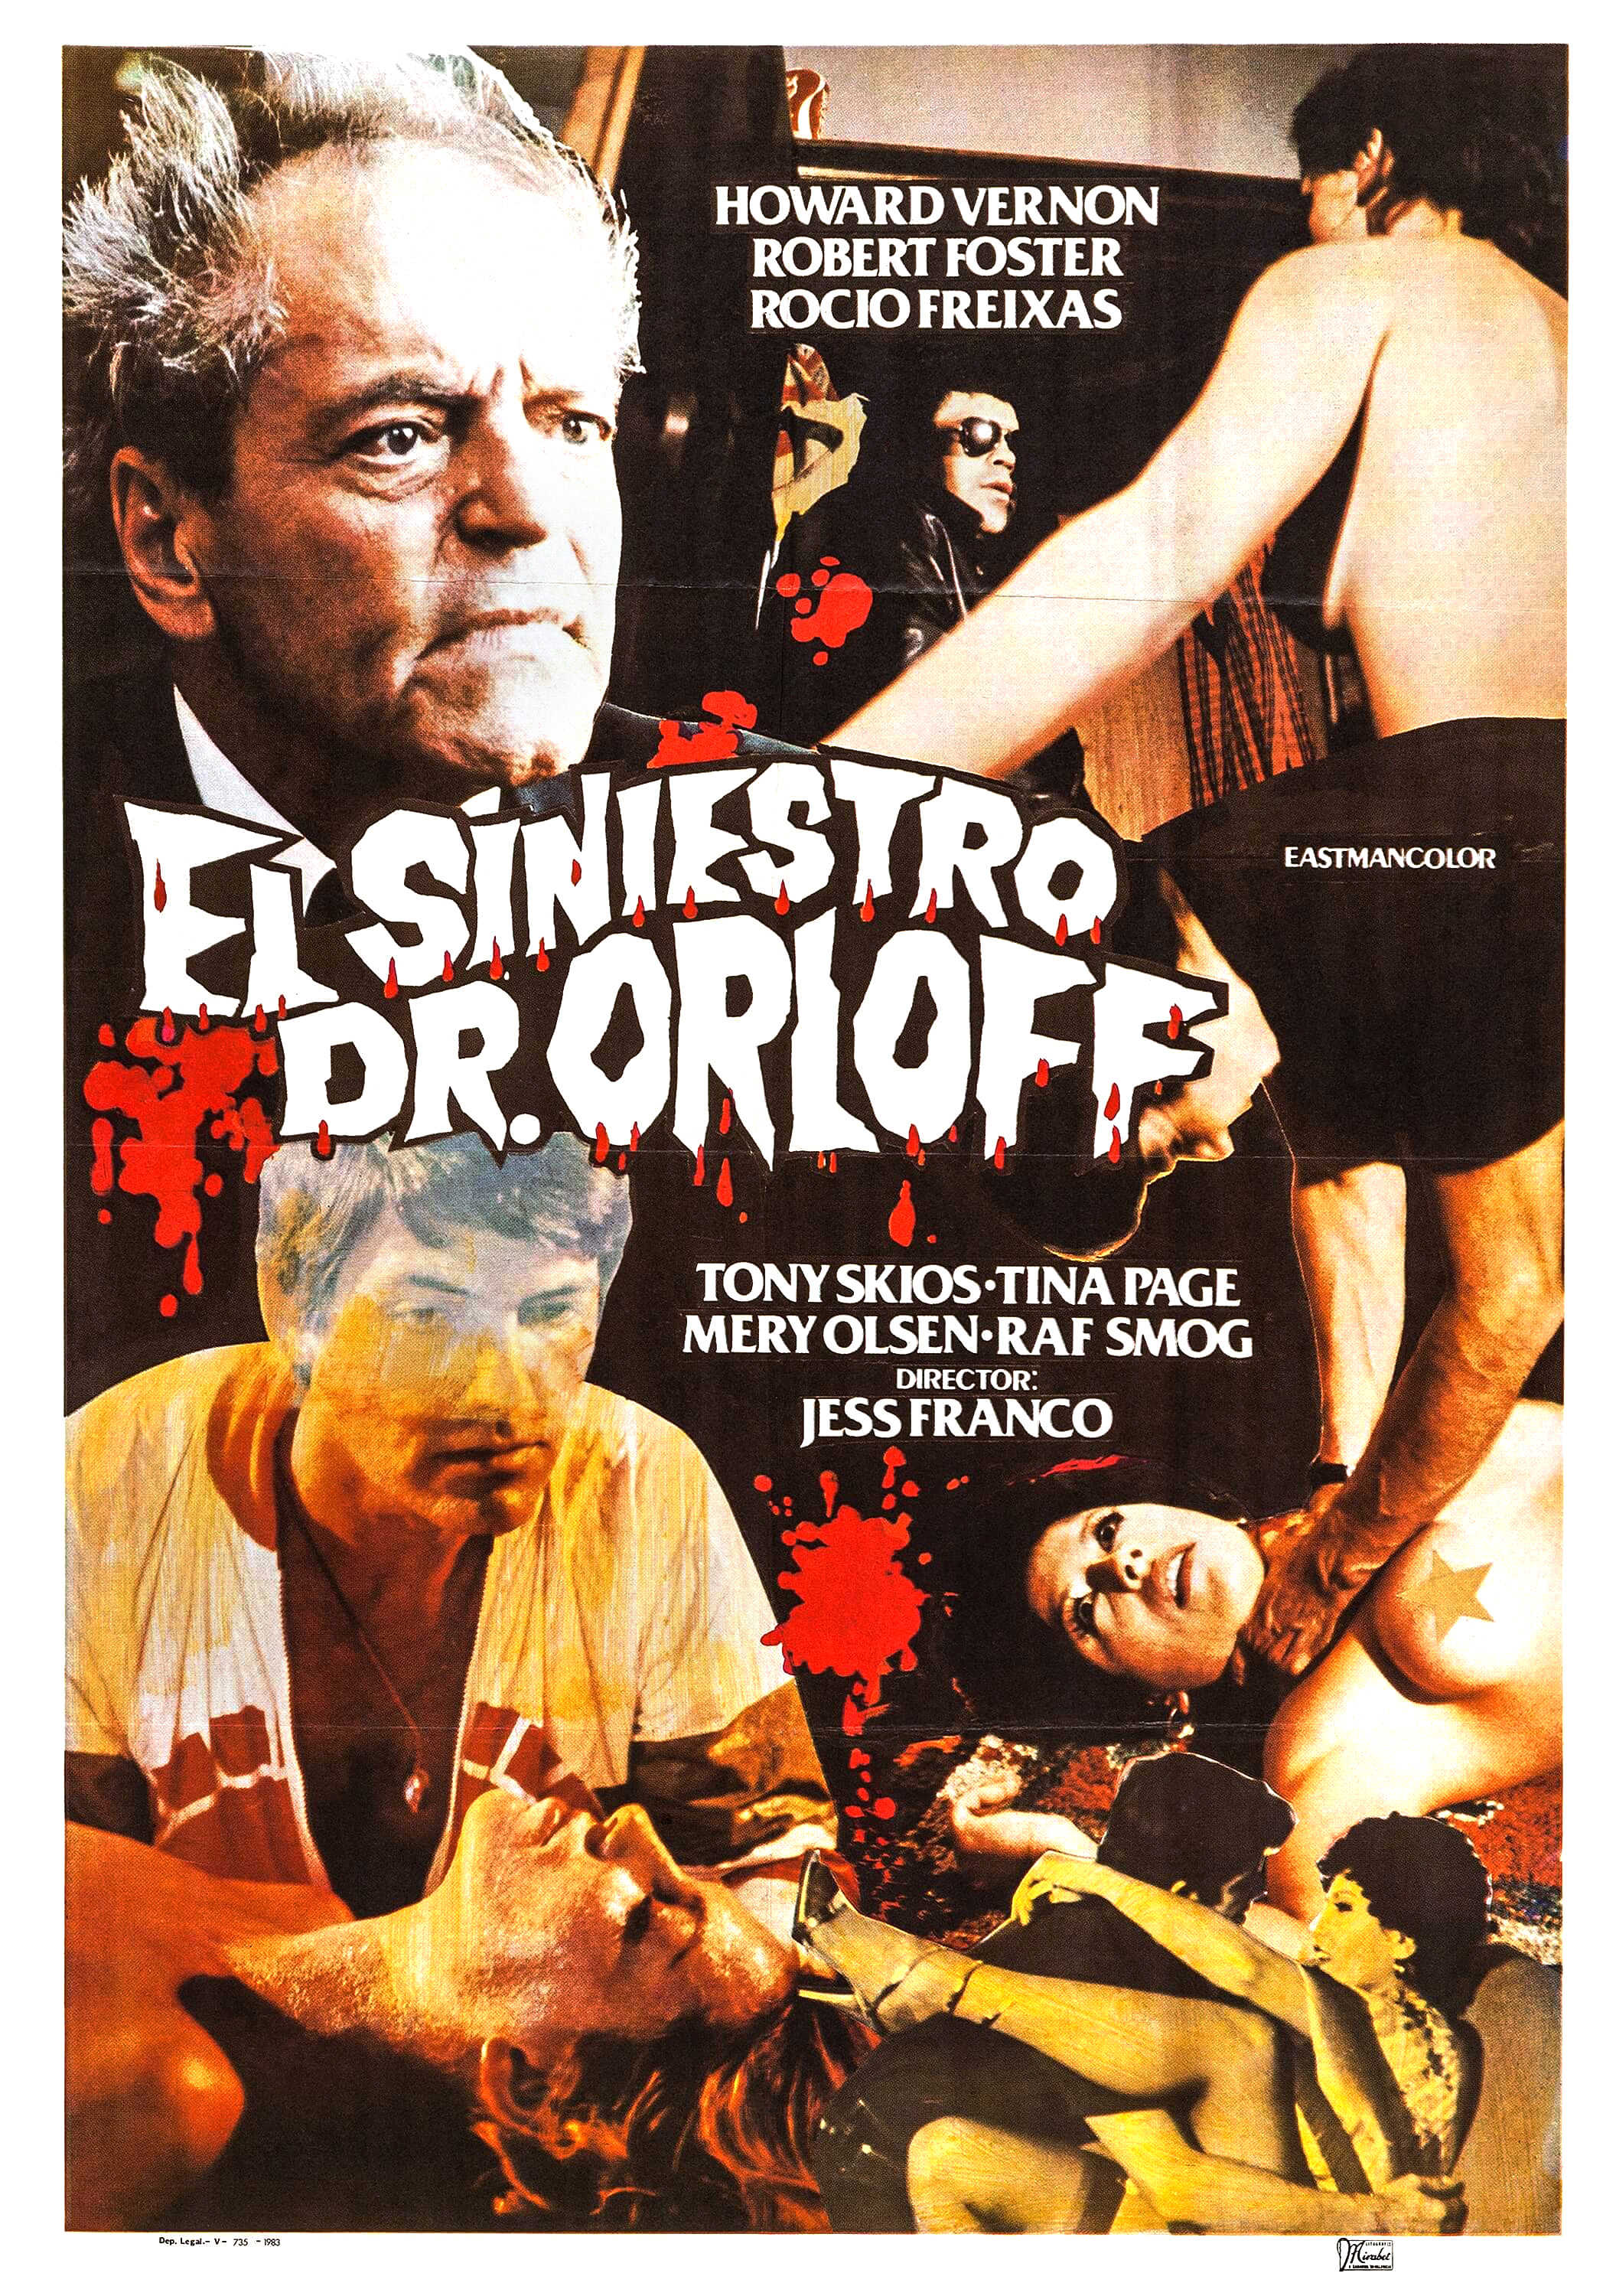 El siniestro doctor Orloff (1984) with English Subtitles on DVD on DVD